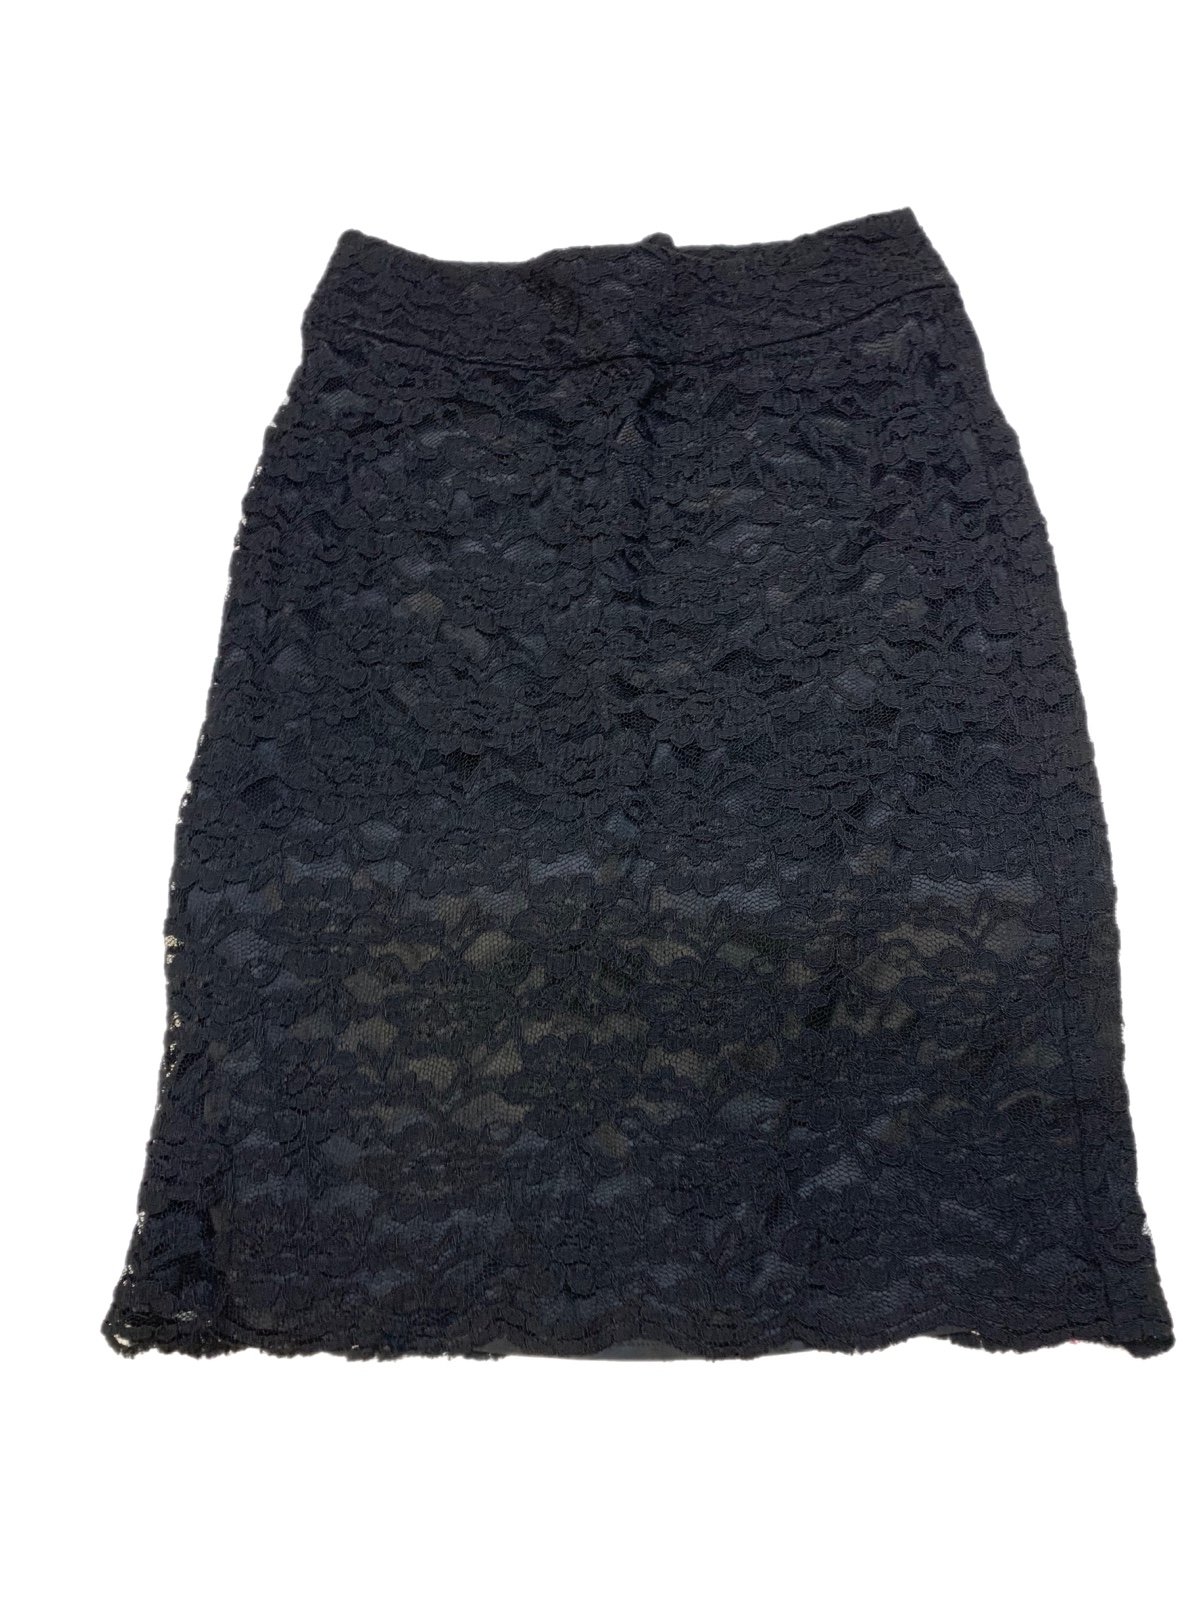 Discounted NWT Banana Republic Womens Black Lace Skirt 